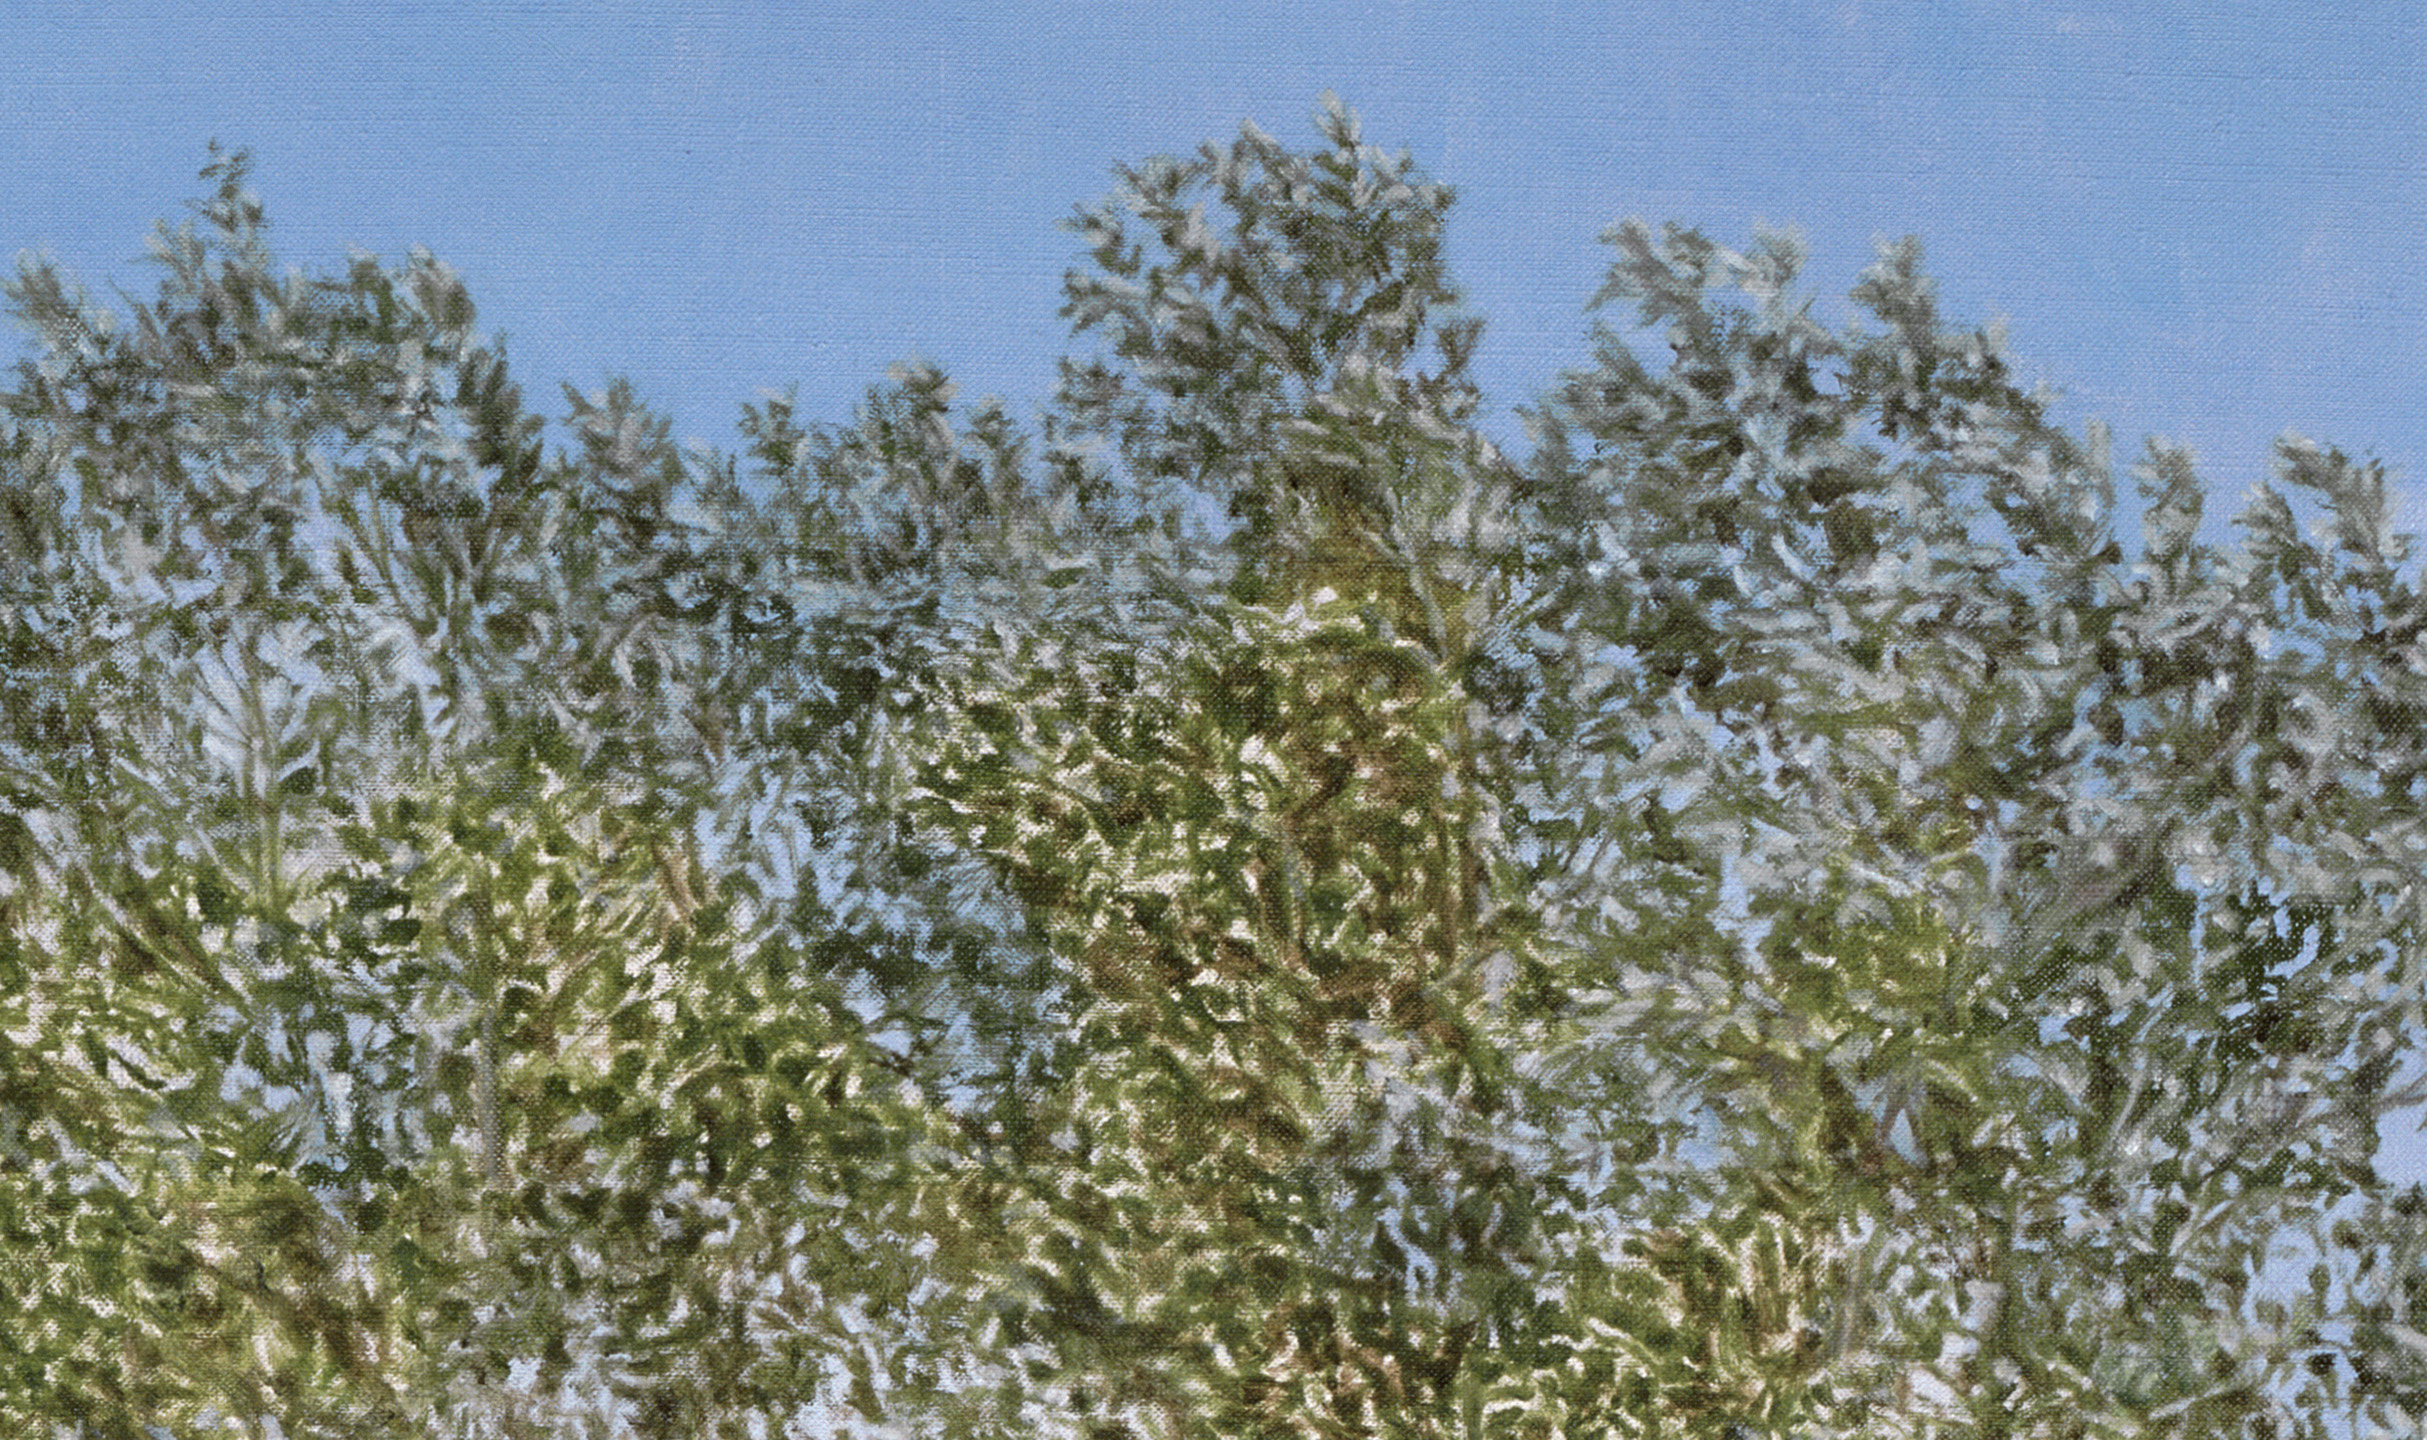   Montana Detour Tree &nbsp;(Detail), 2014 Oil on linen 60 1/2 x 38 inches 